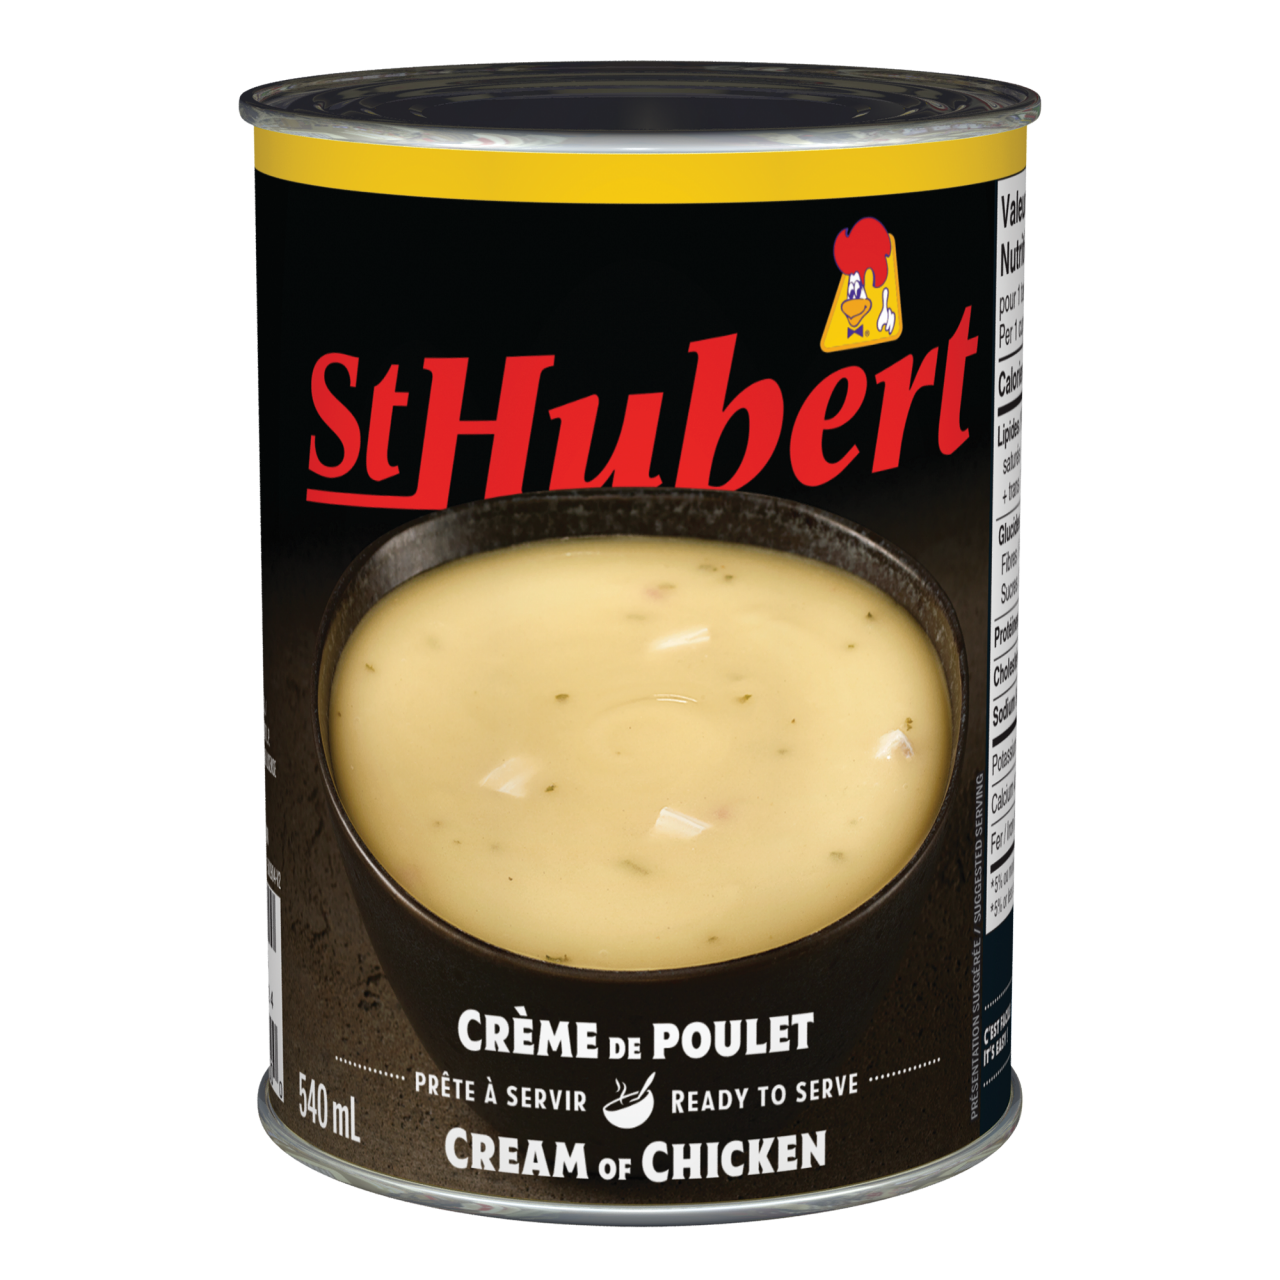 St-Hubert cream of chicken soup